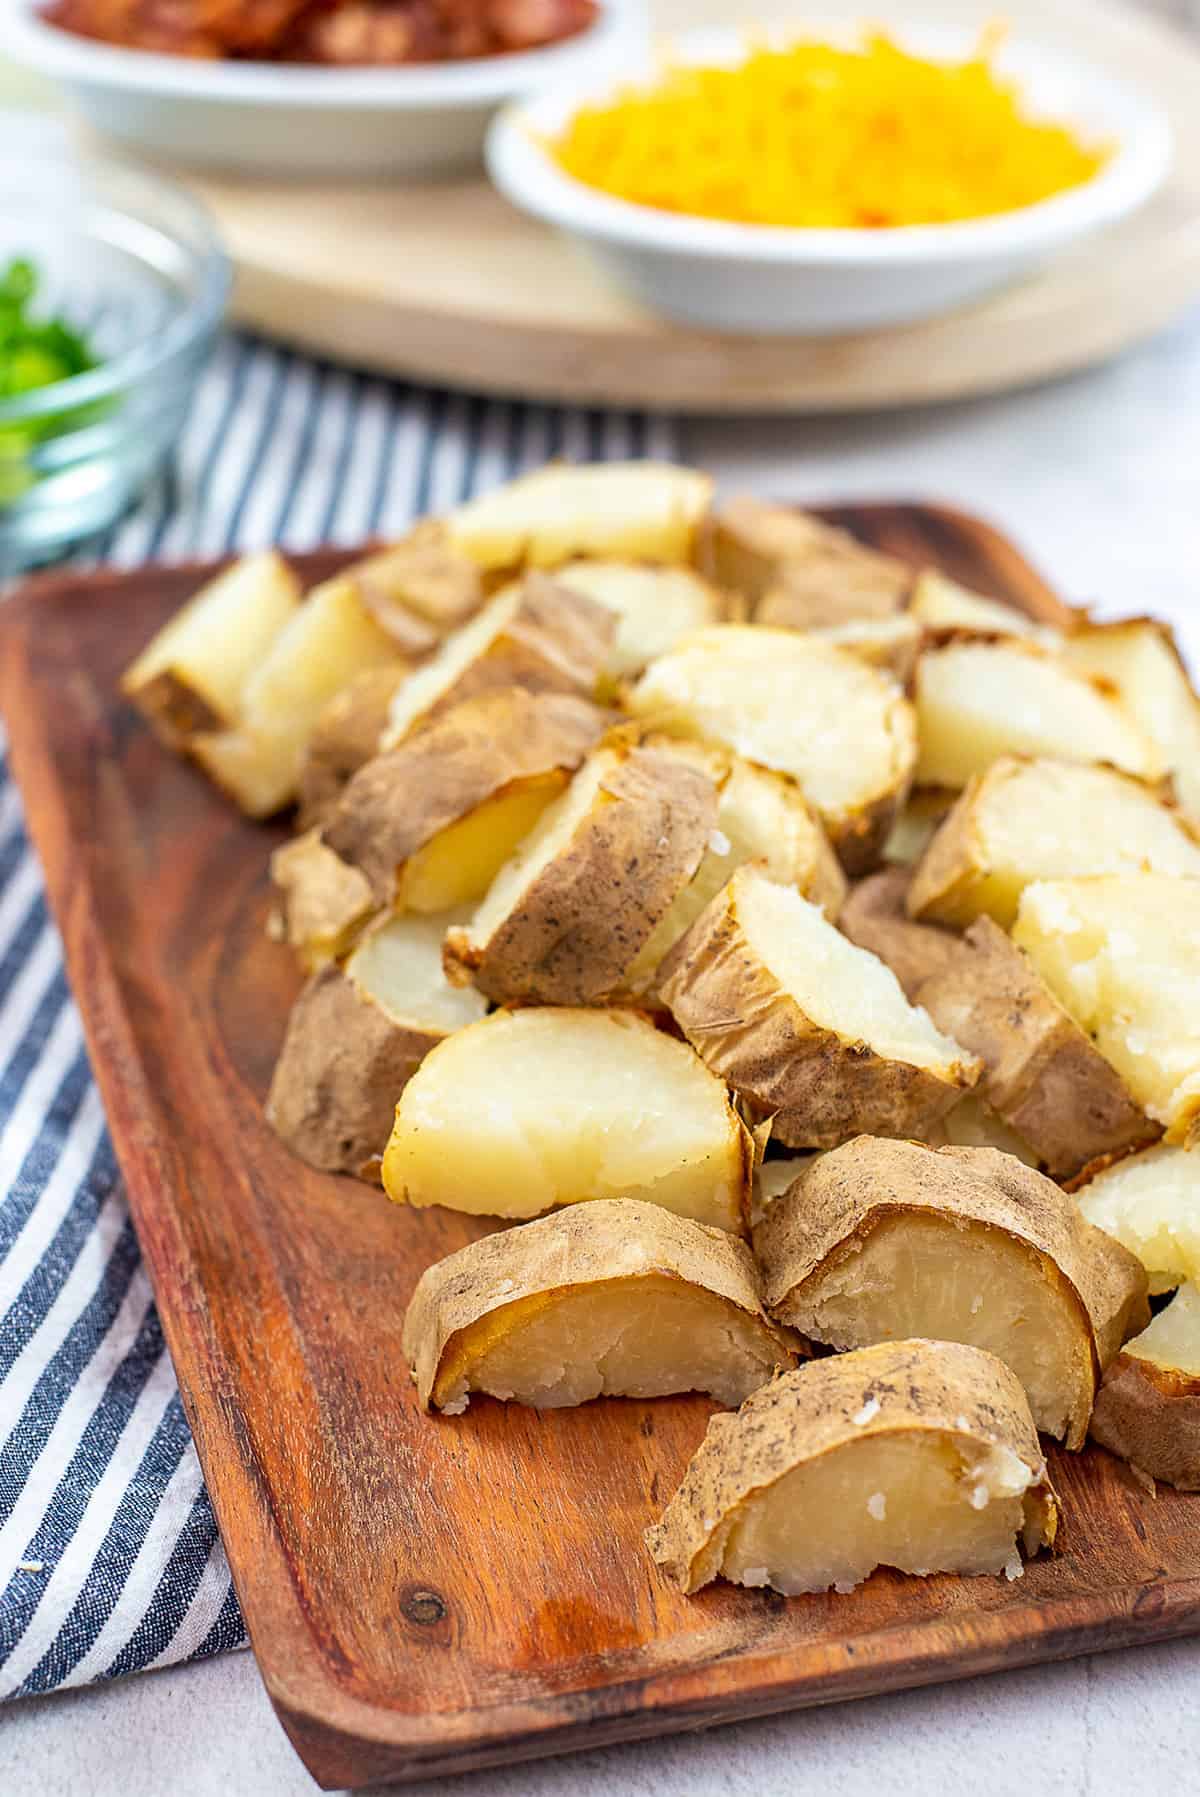 chopped potatoes on wooden cutting board.